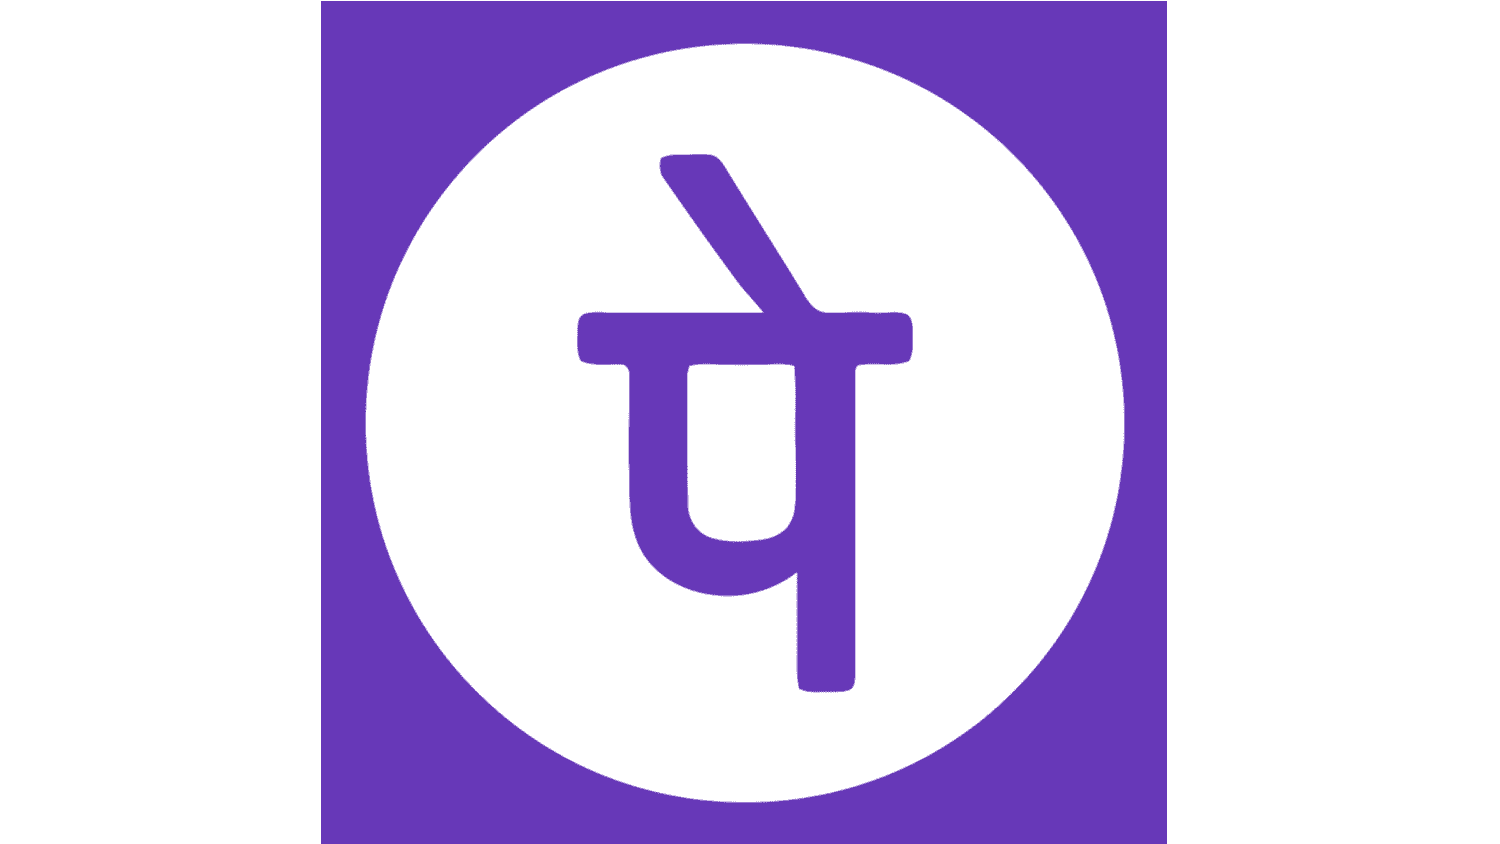 PhonePe Logo - PhonePe Logo and symbol, meaning